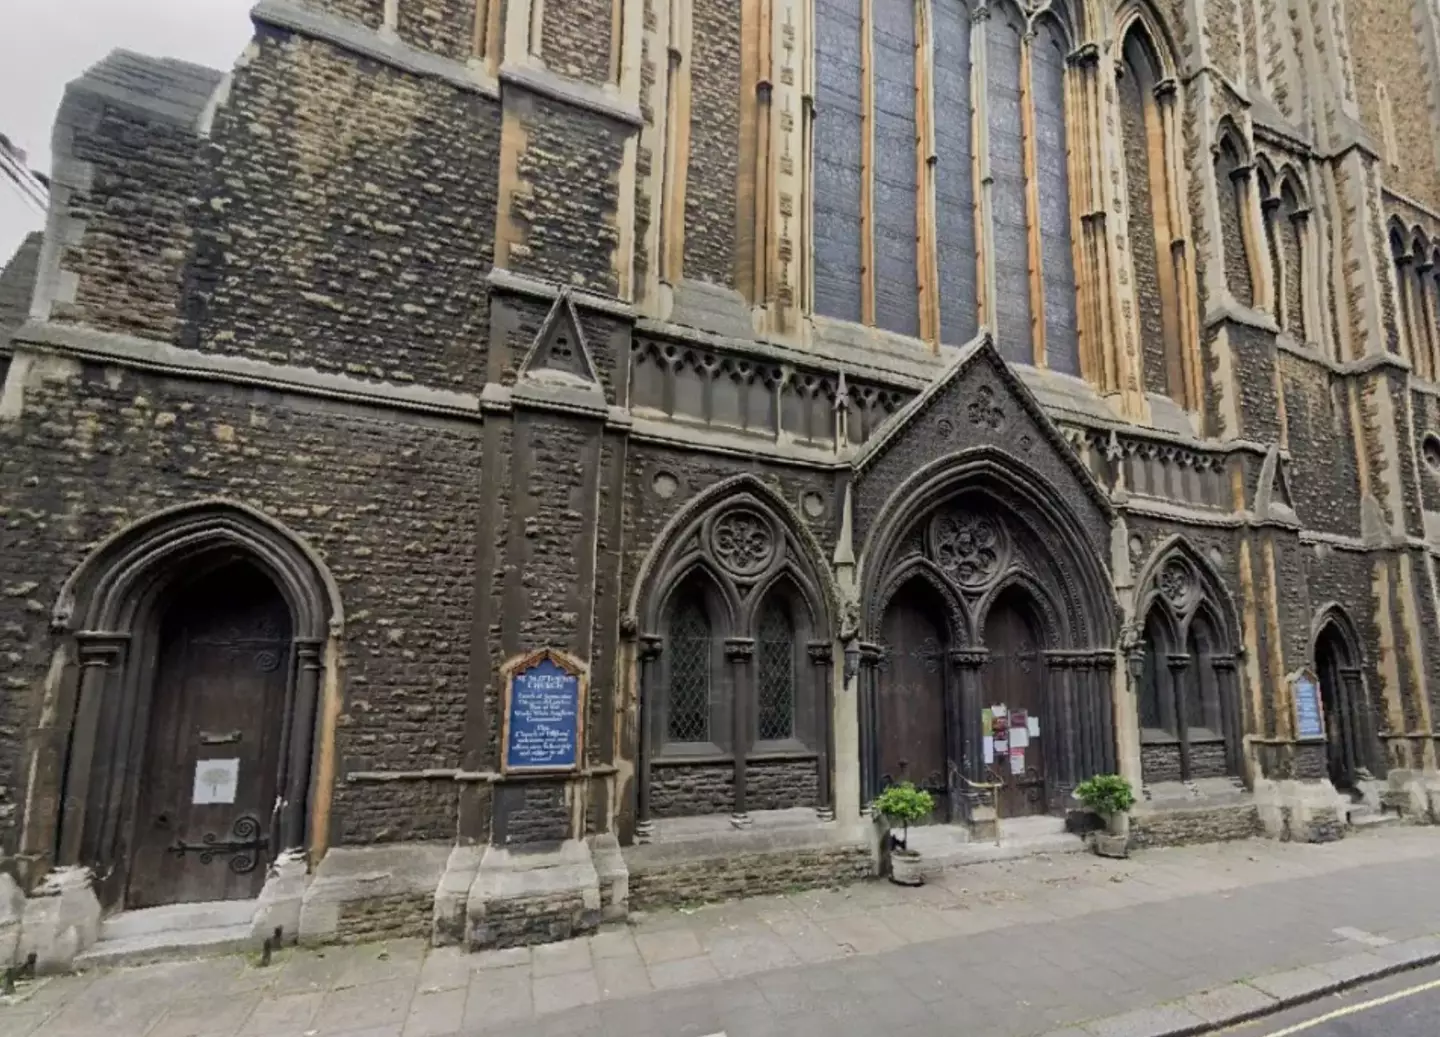 The teacher's body was found in St Matthew's in London.